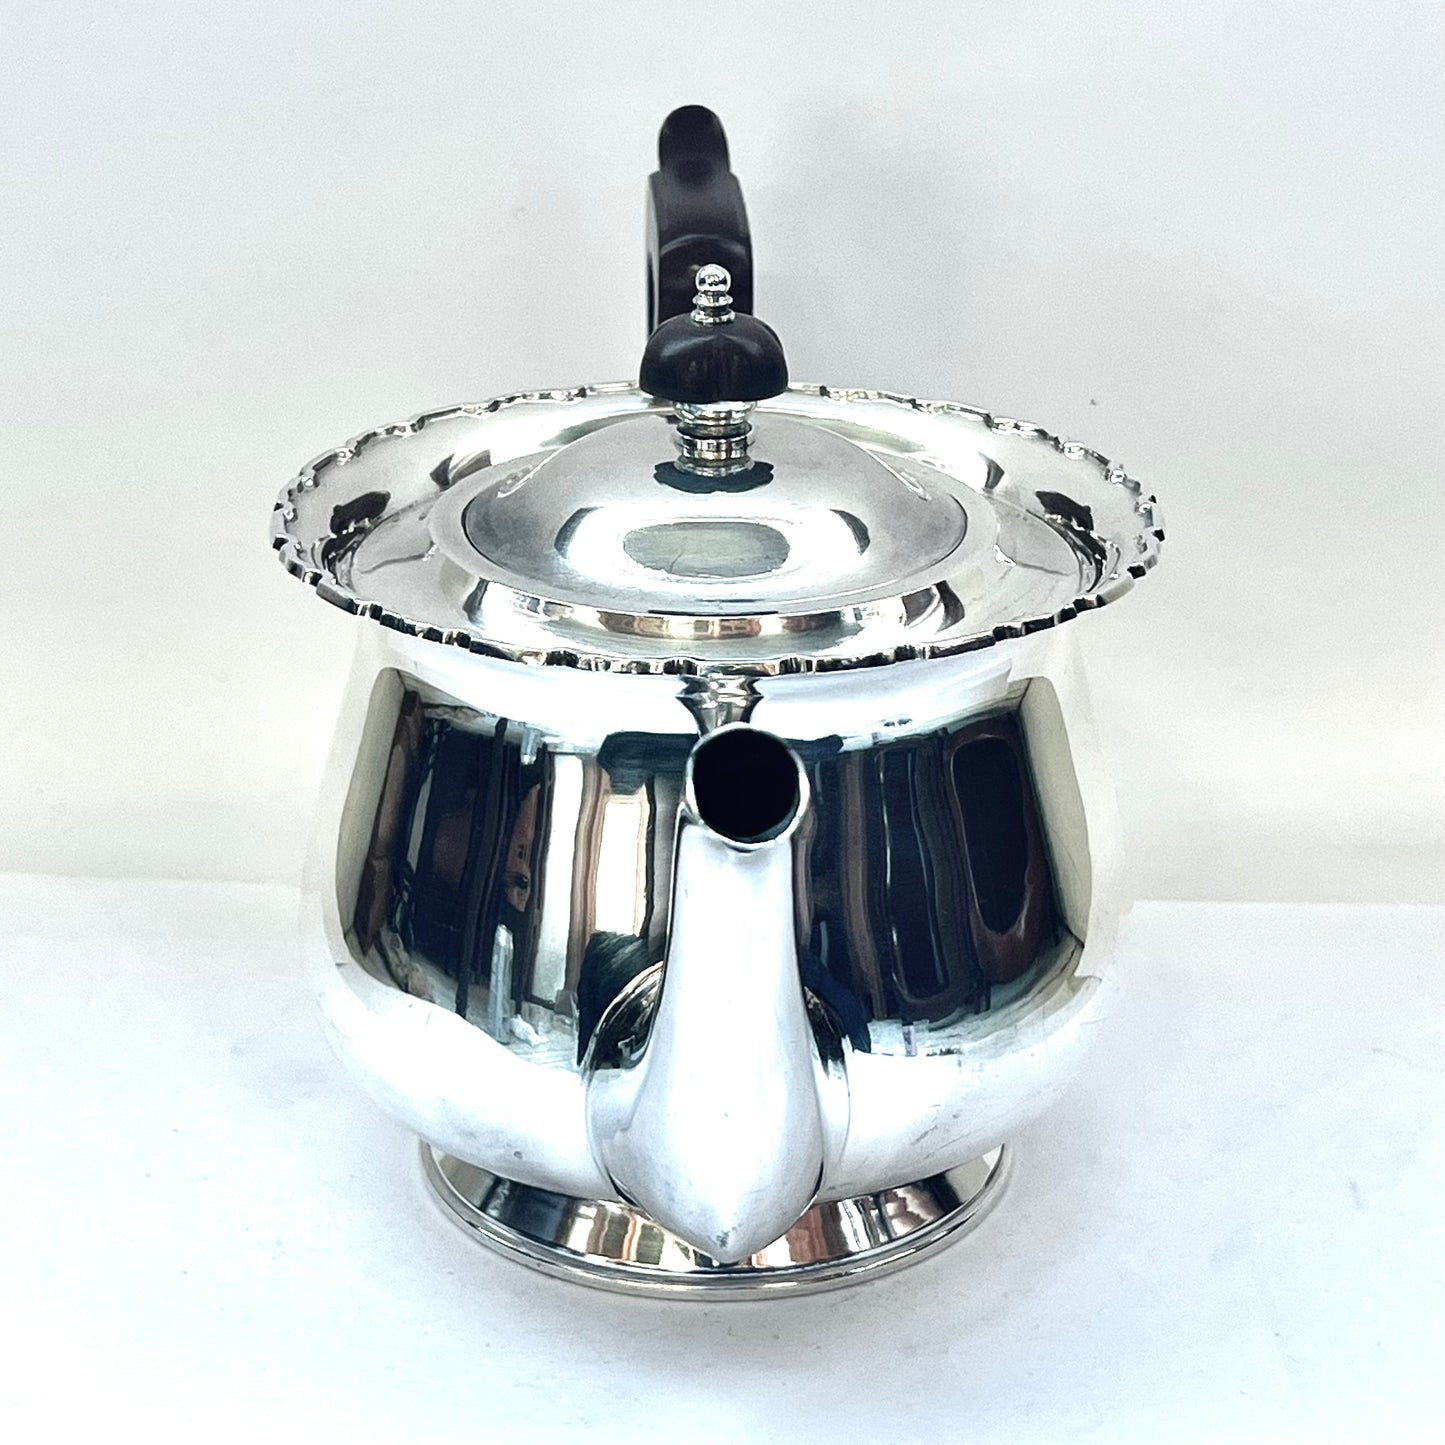 1930s Australian W.J. Sanders sterling silver teapot with Art Deco finial and handles, likely bakelite